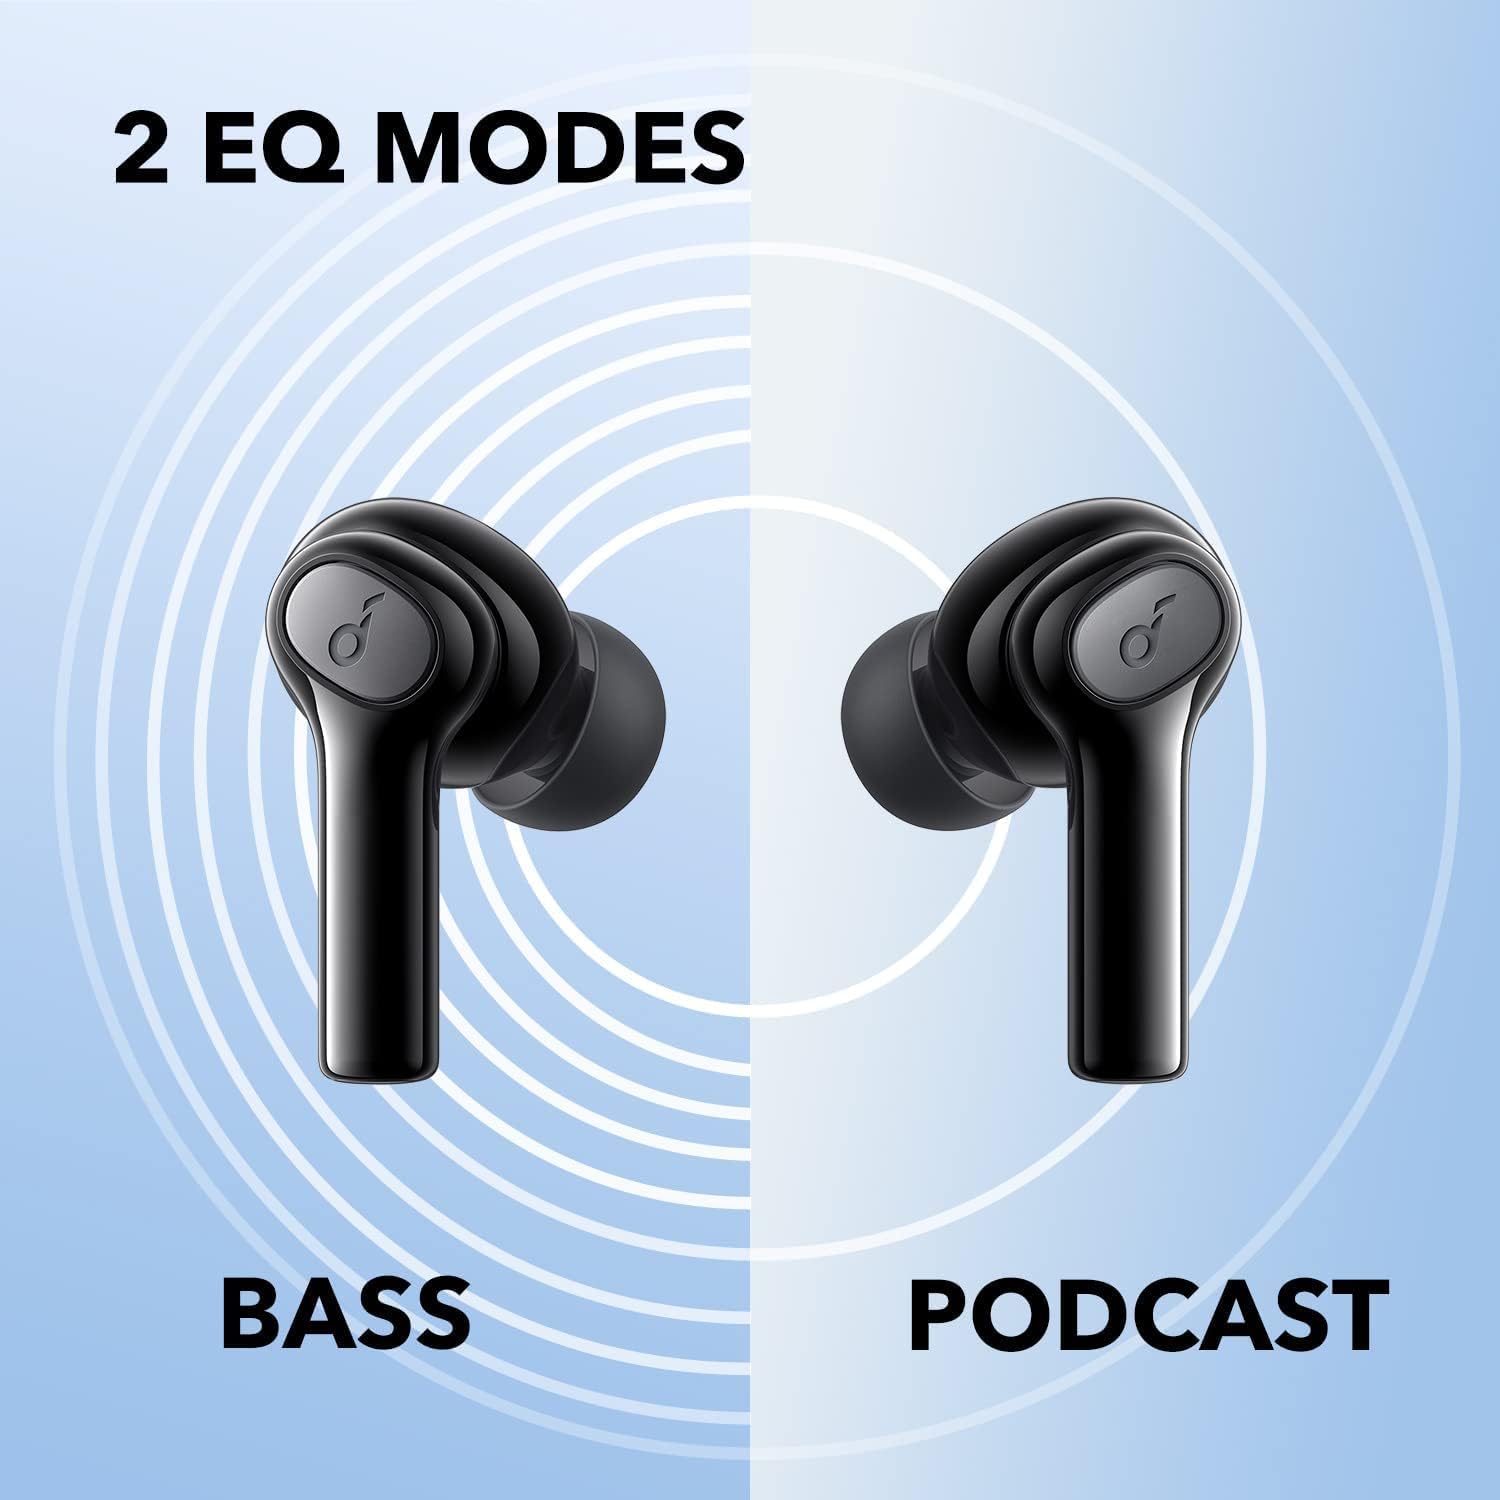 Anker Soundcore Life P2i True Wireless Earbuds – Black